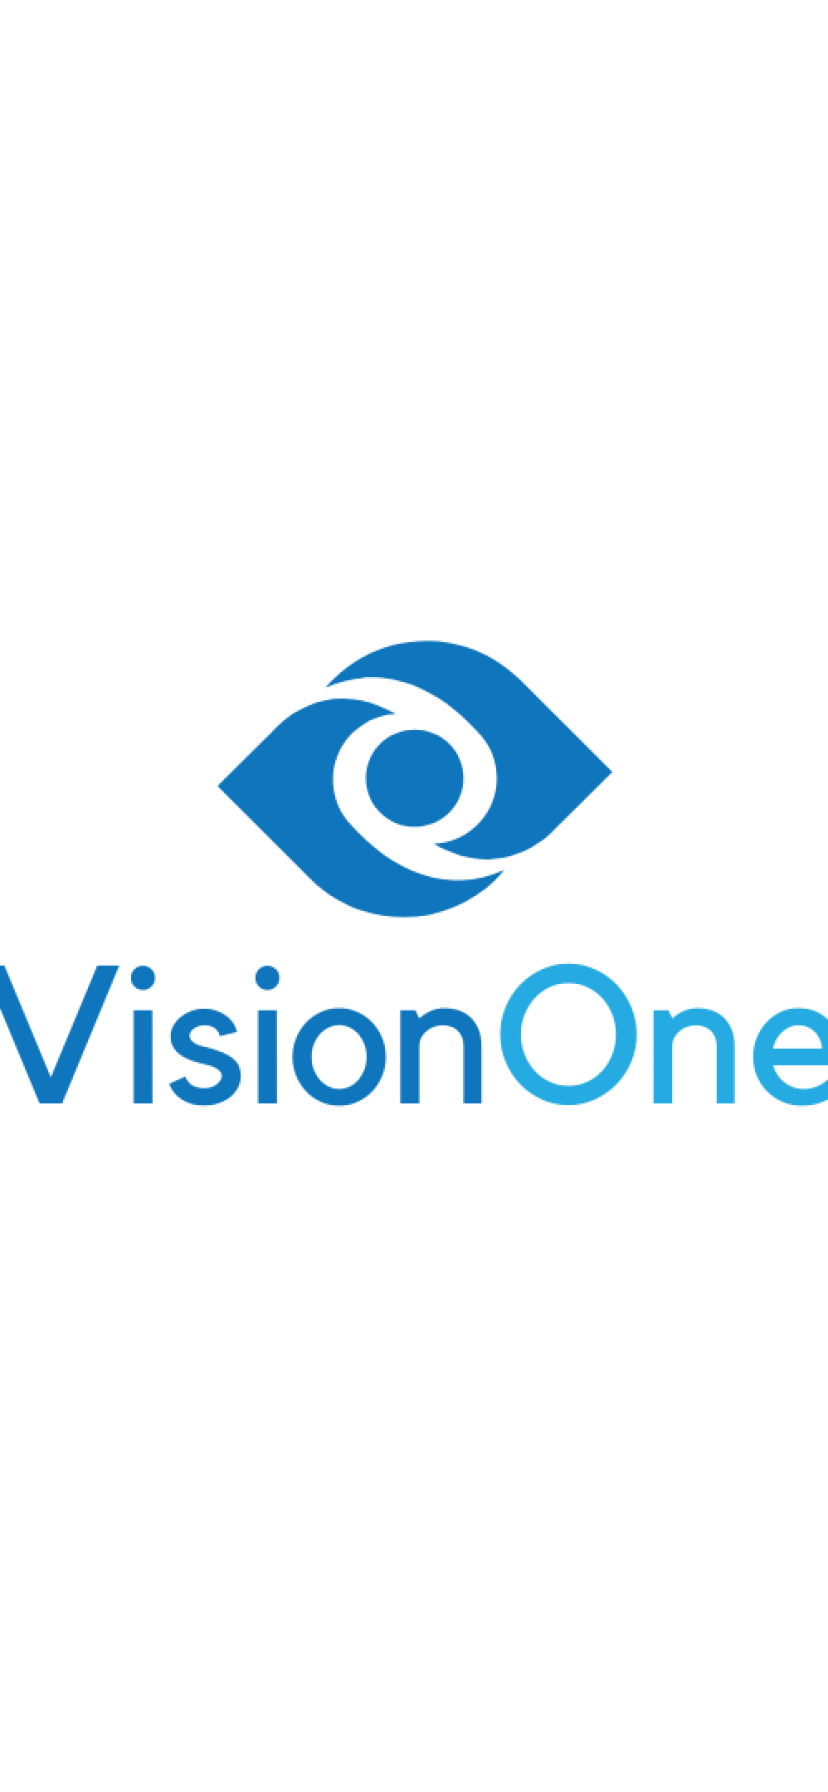 Visionone.co domain name for sale